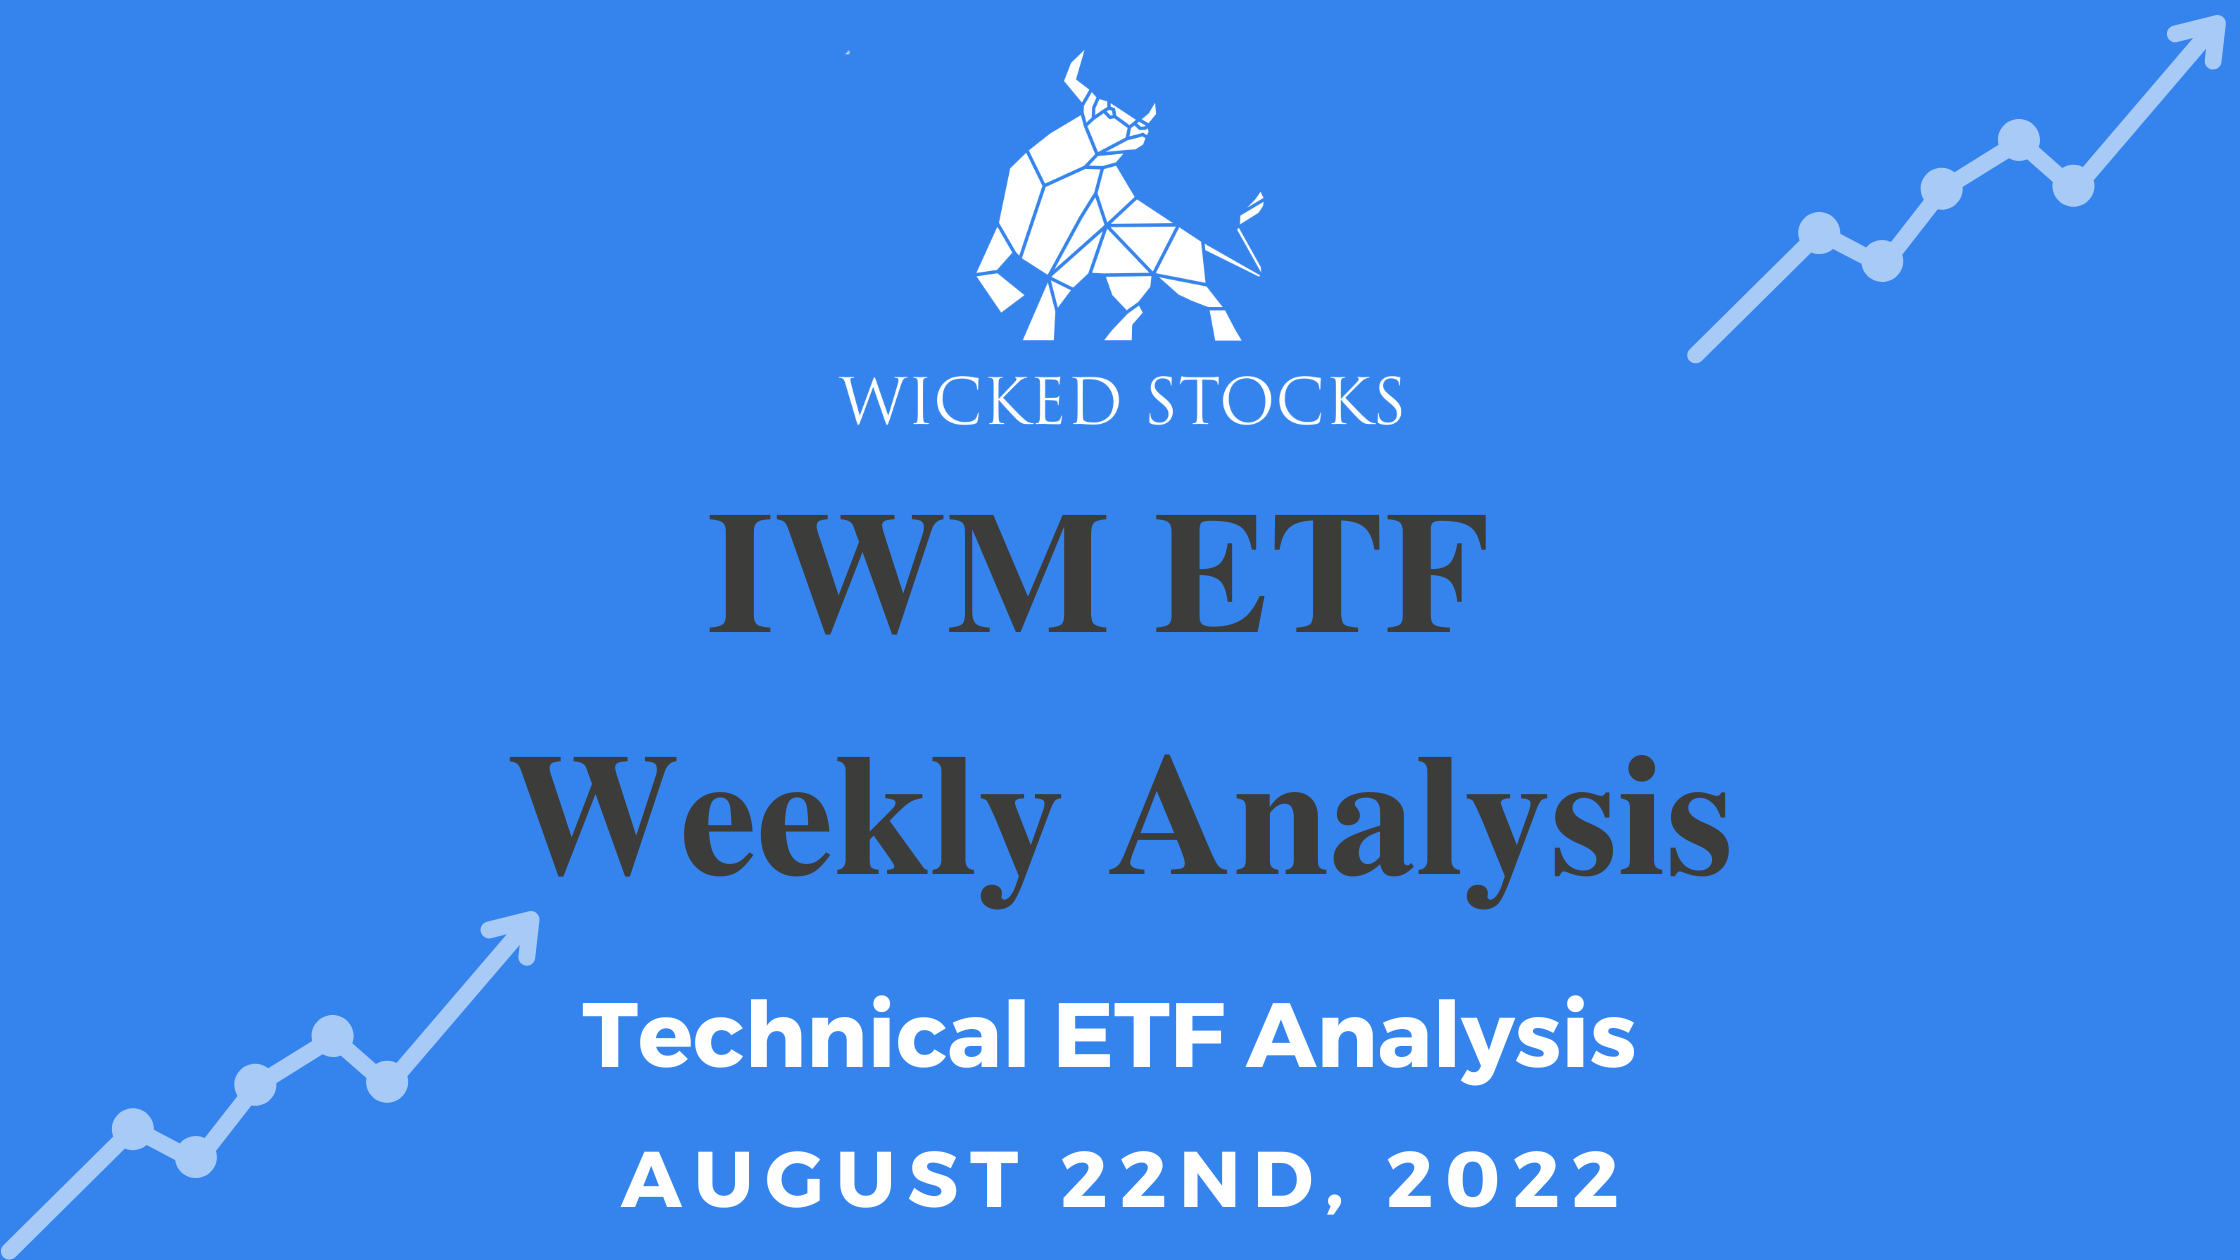 IWM ETF Weekly Analysis 8/22/22